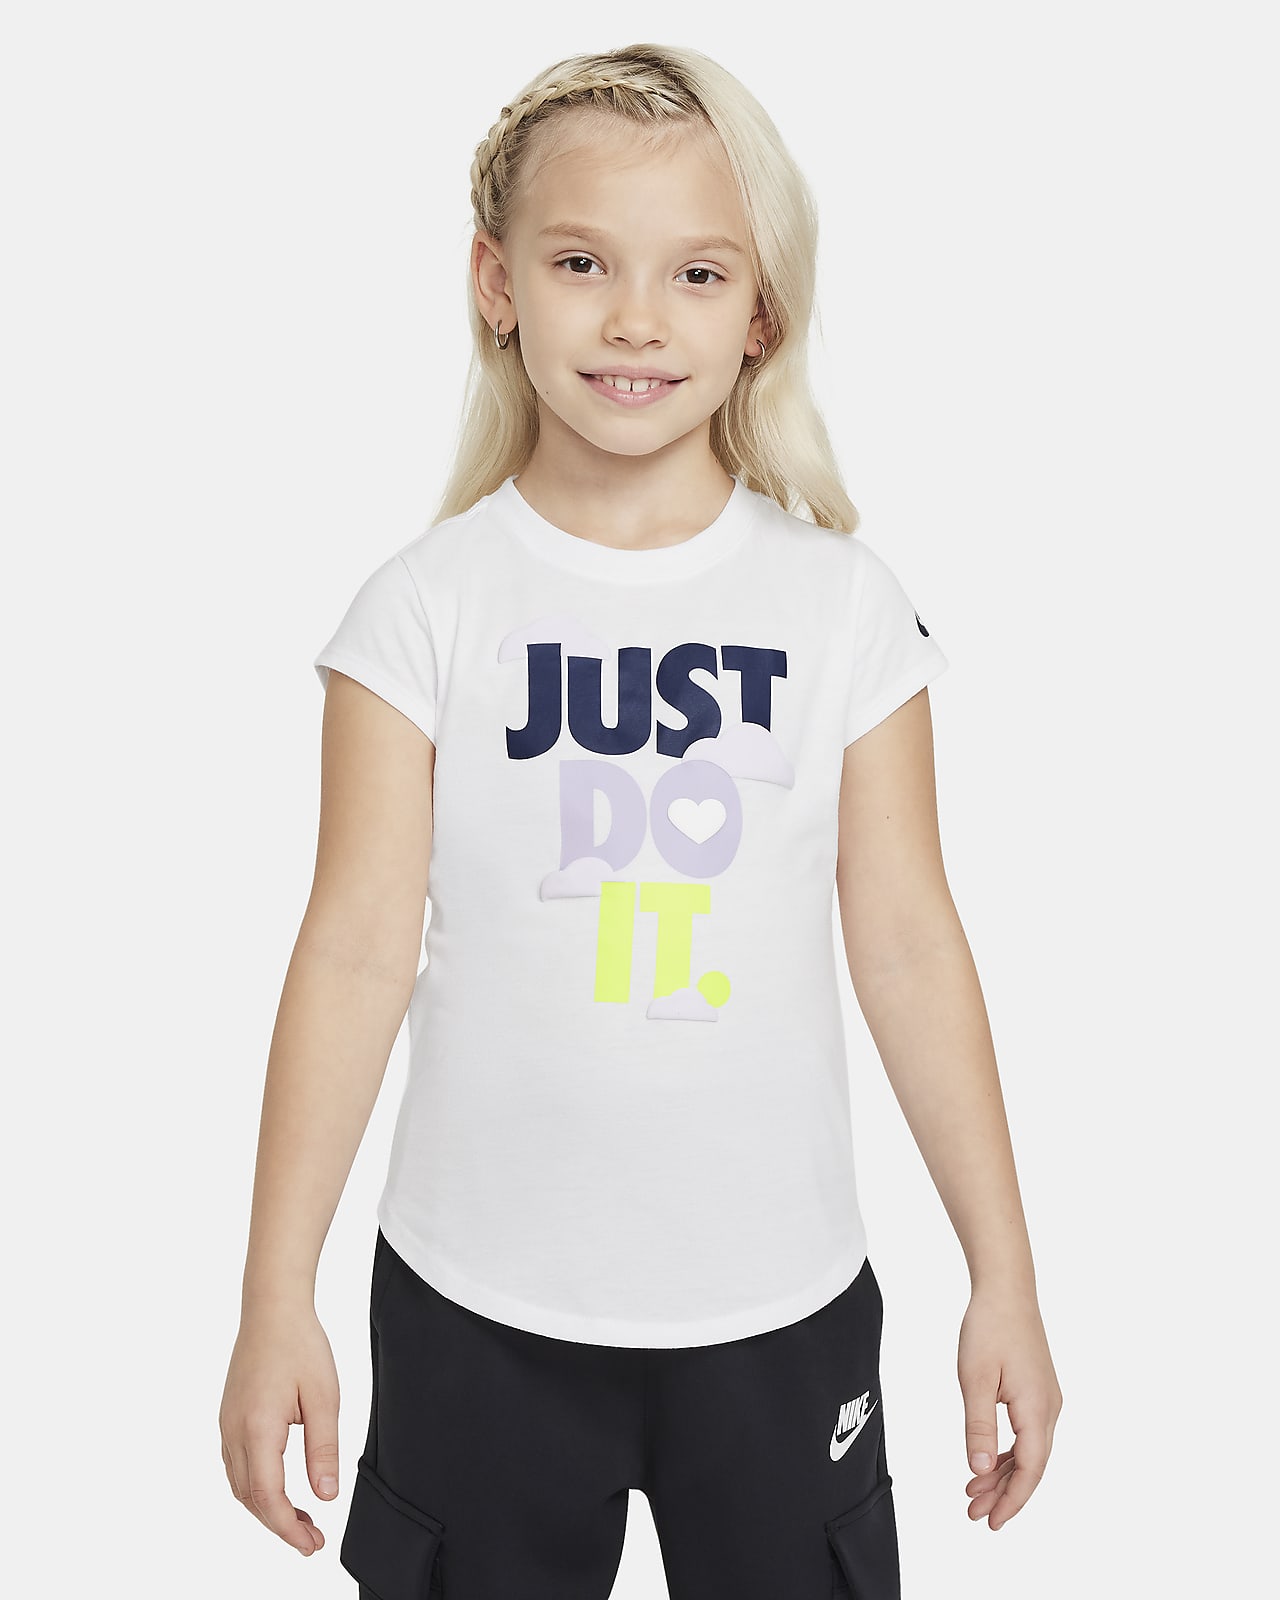 Nike Sweet Swoosh "Just Do It" Little Kids' Graphic T-Shirt